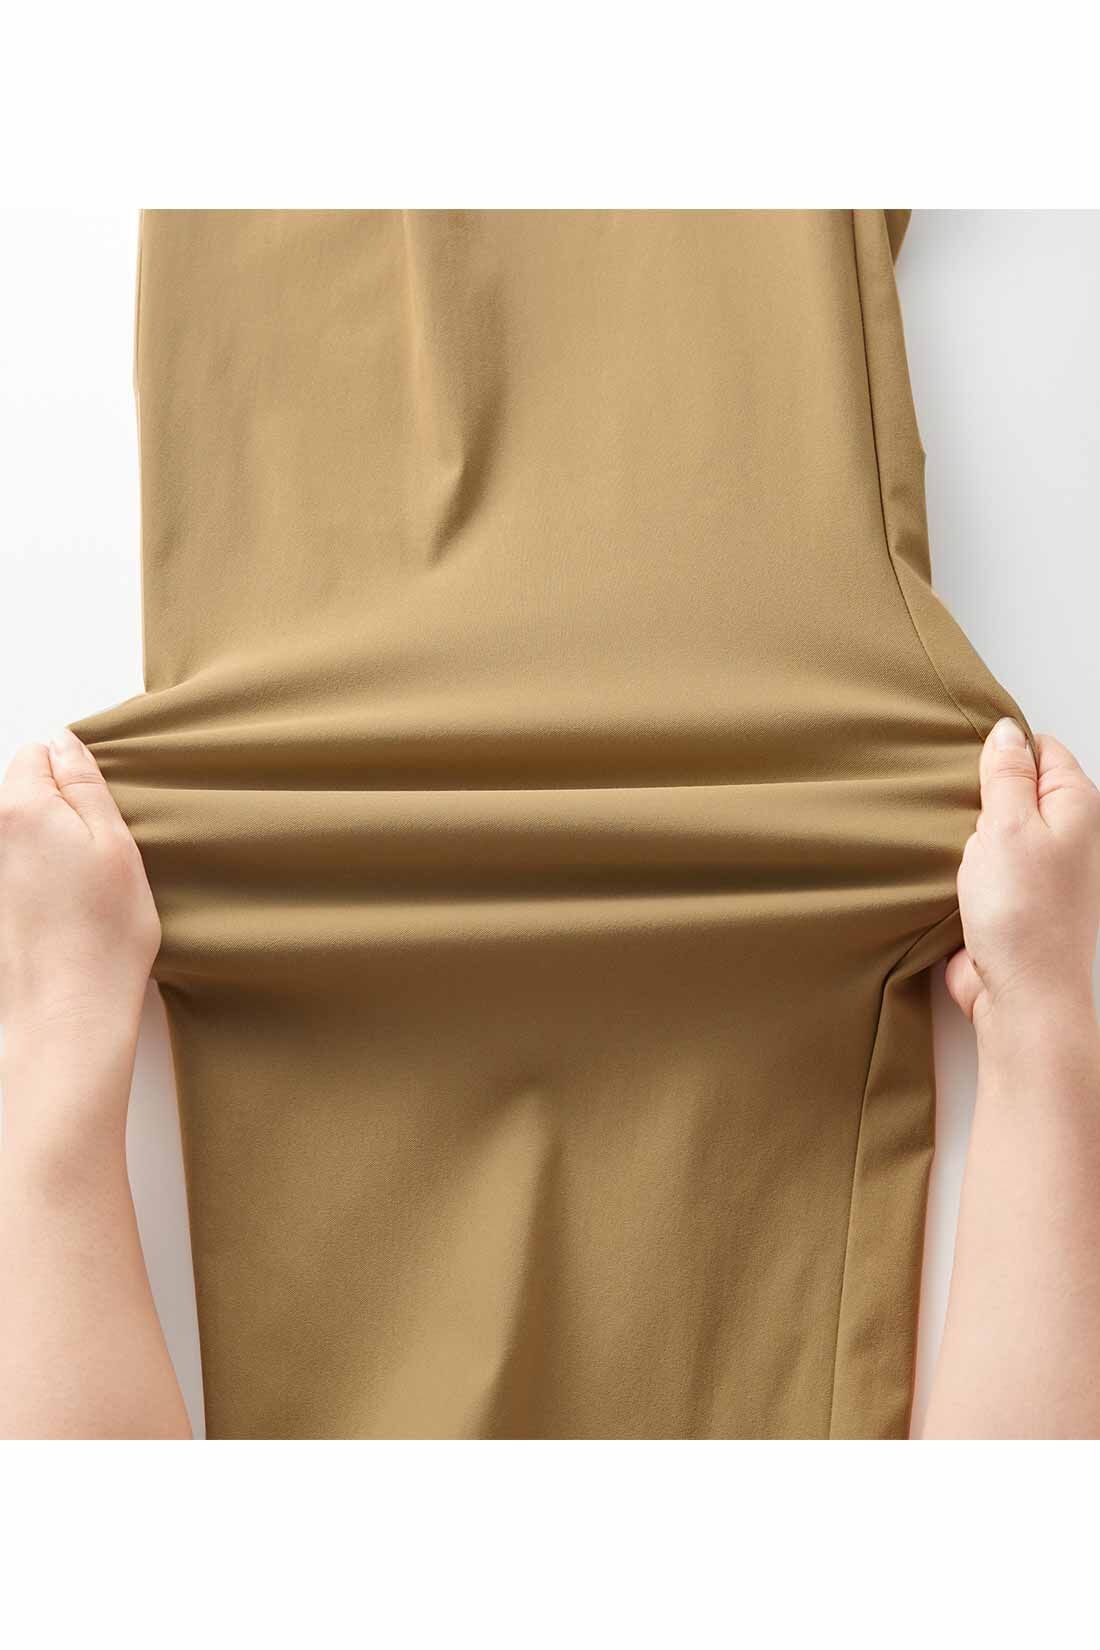 IEDIT|IEDIT[イディット]　ぐいっとしなやかで快適な美脚見えサイドタック ナイスラっとエアノビワイドパンツ|ぐいっと伸びて快適な布はく素材。